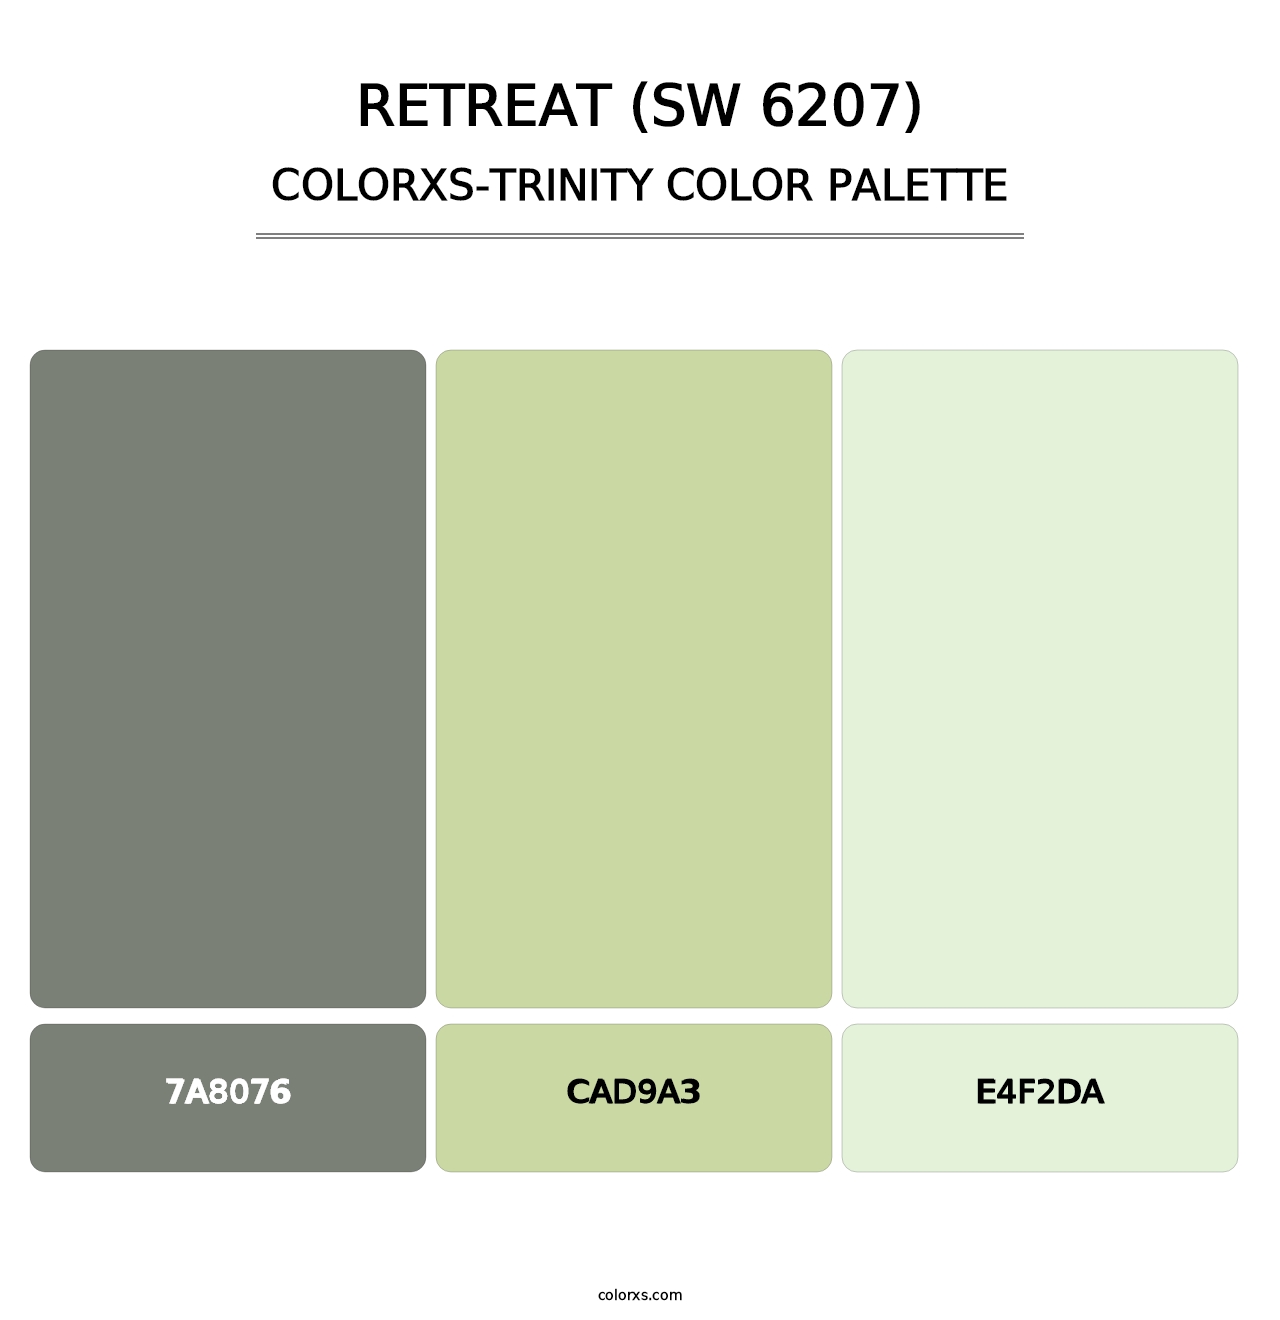 Retreat (SW 6207) - Colorxs Trinity Palette